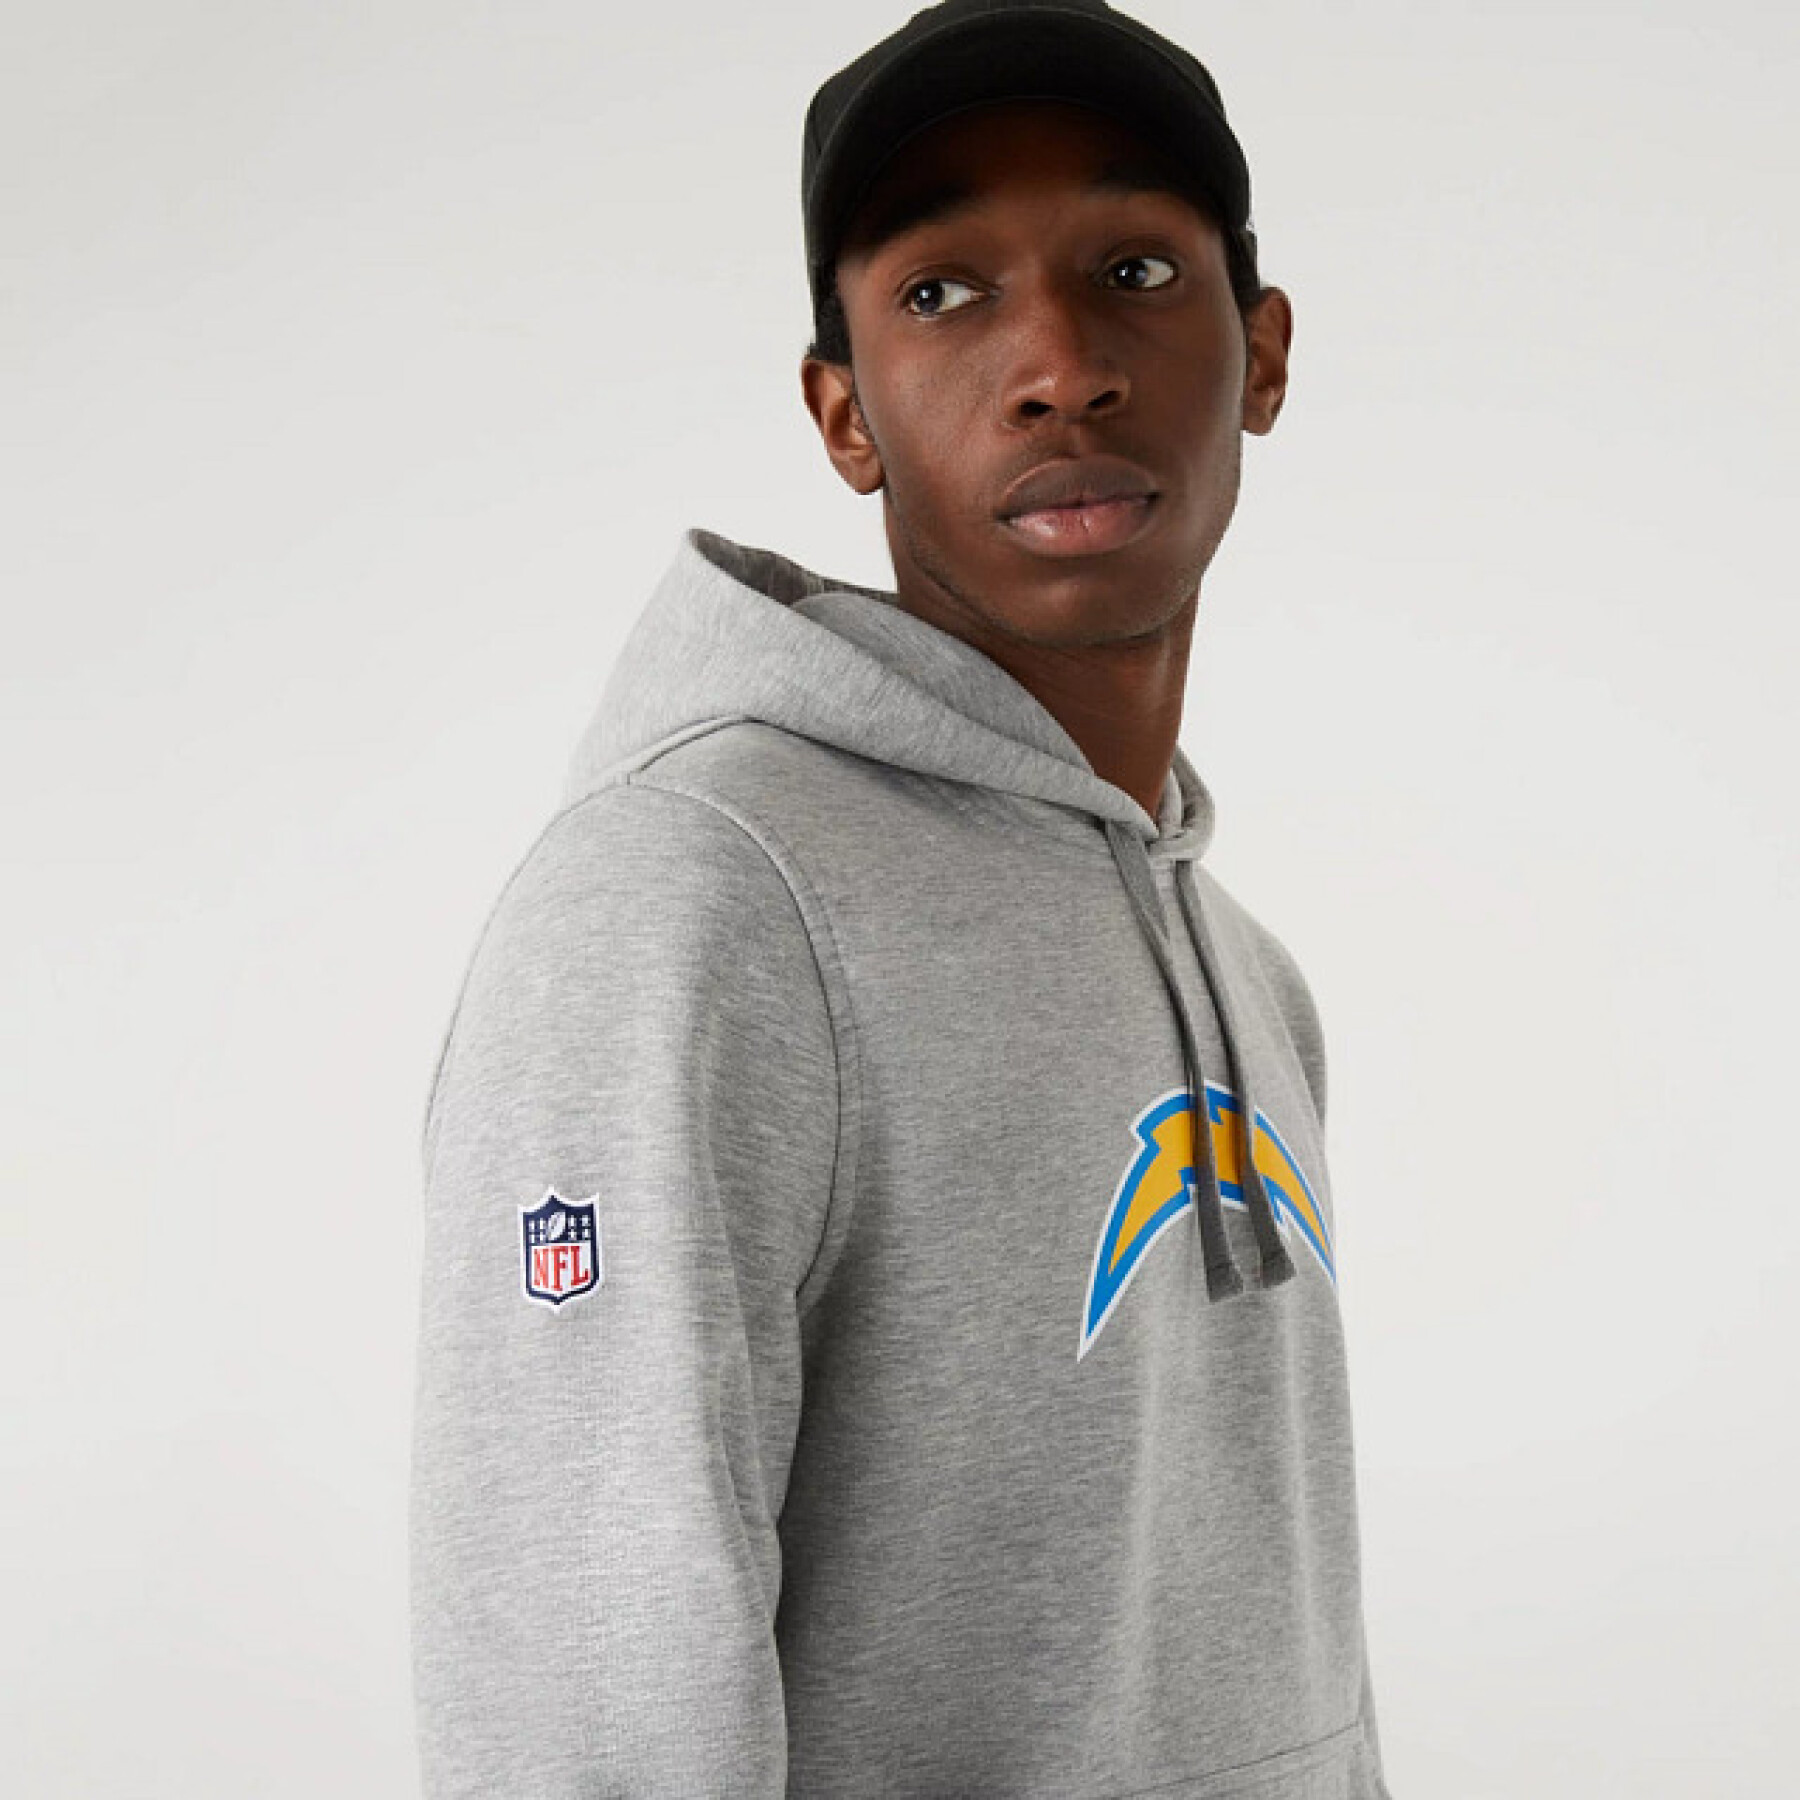 Hooded sweatshirt Los Angeles Chargers NFL